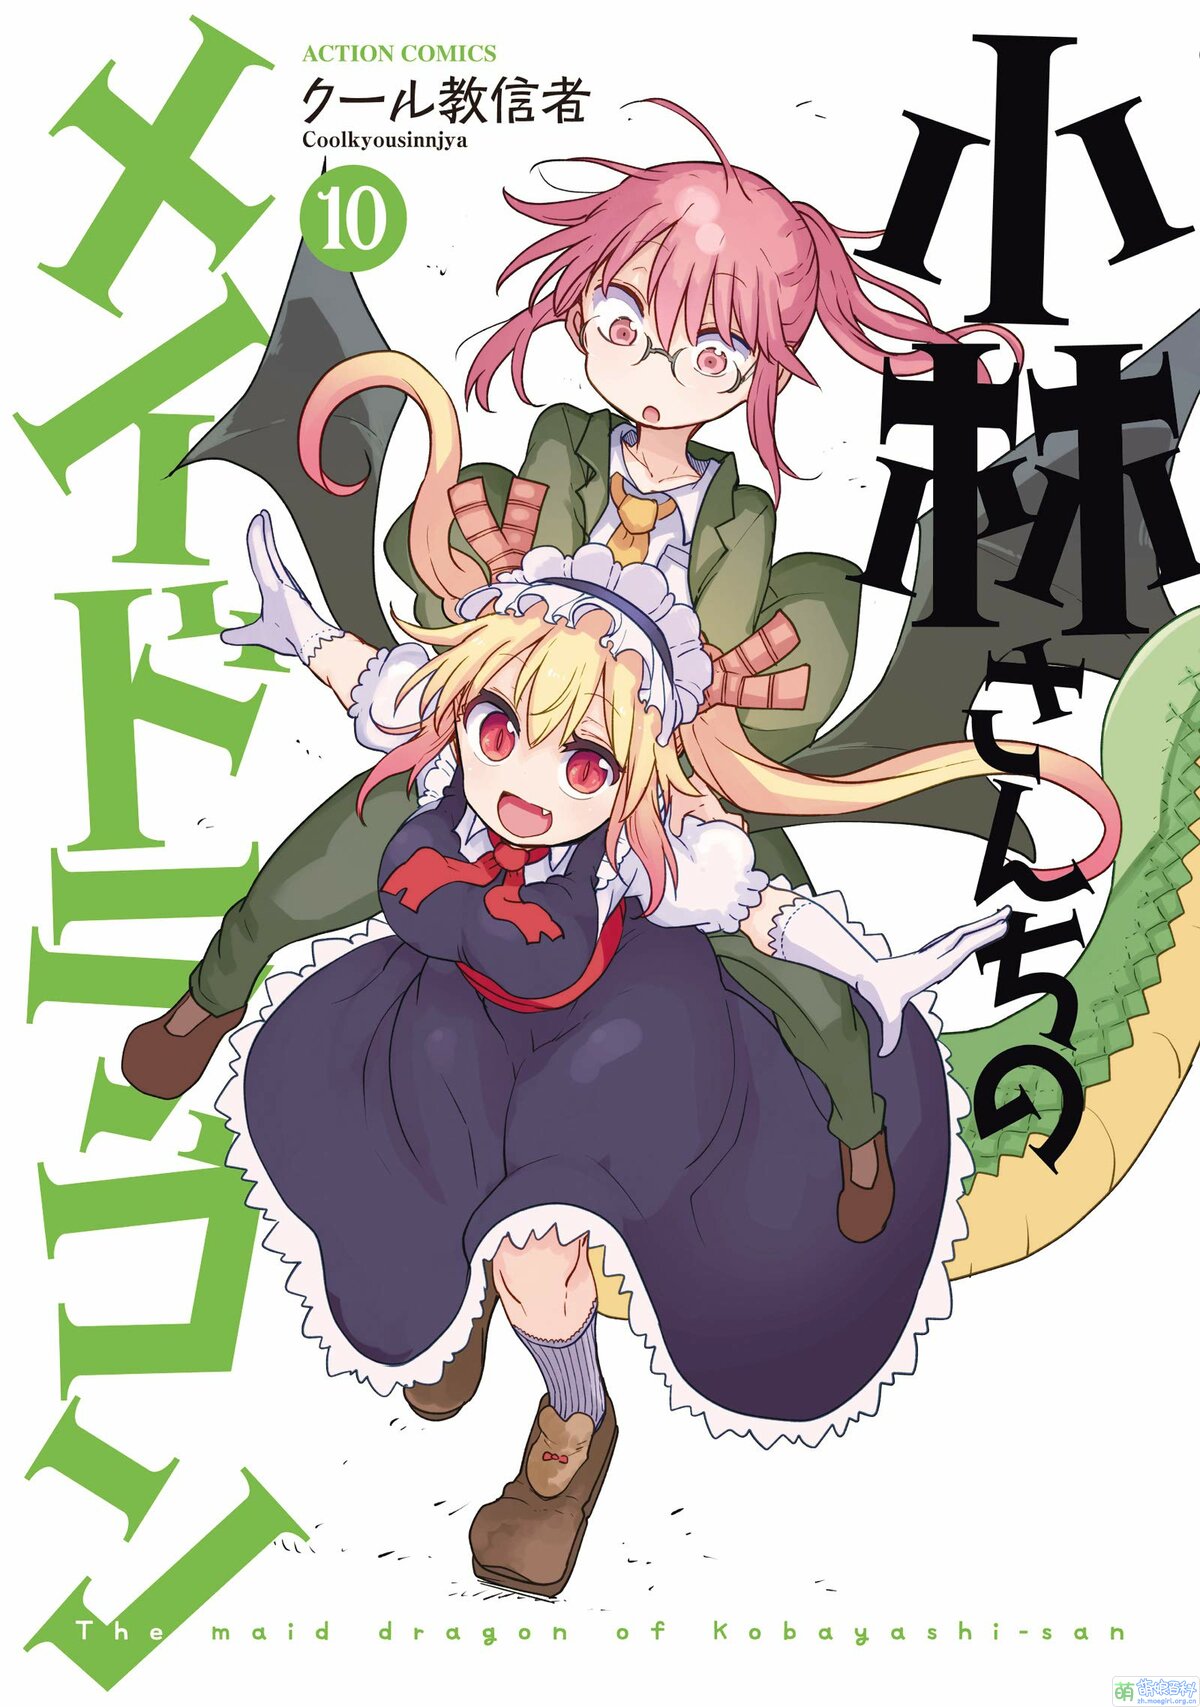 Miss Kobayashi's Dragon Maid - Wikipedia